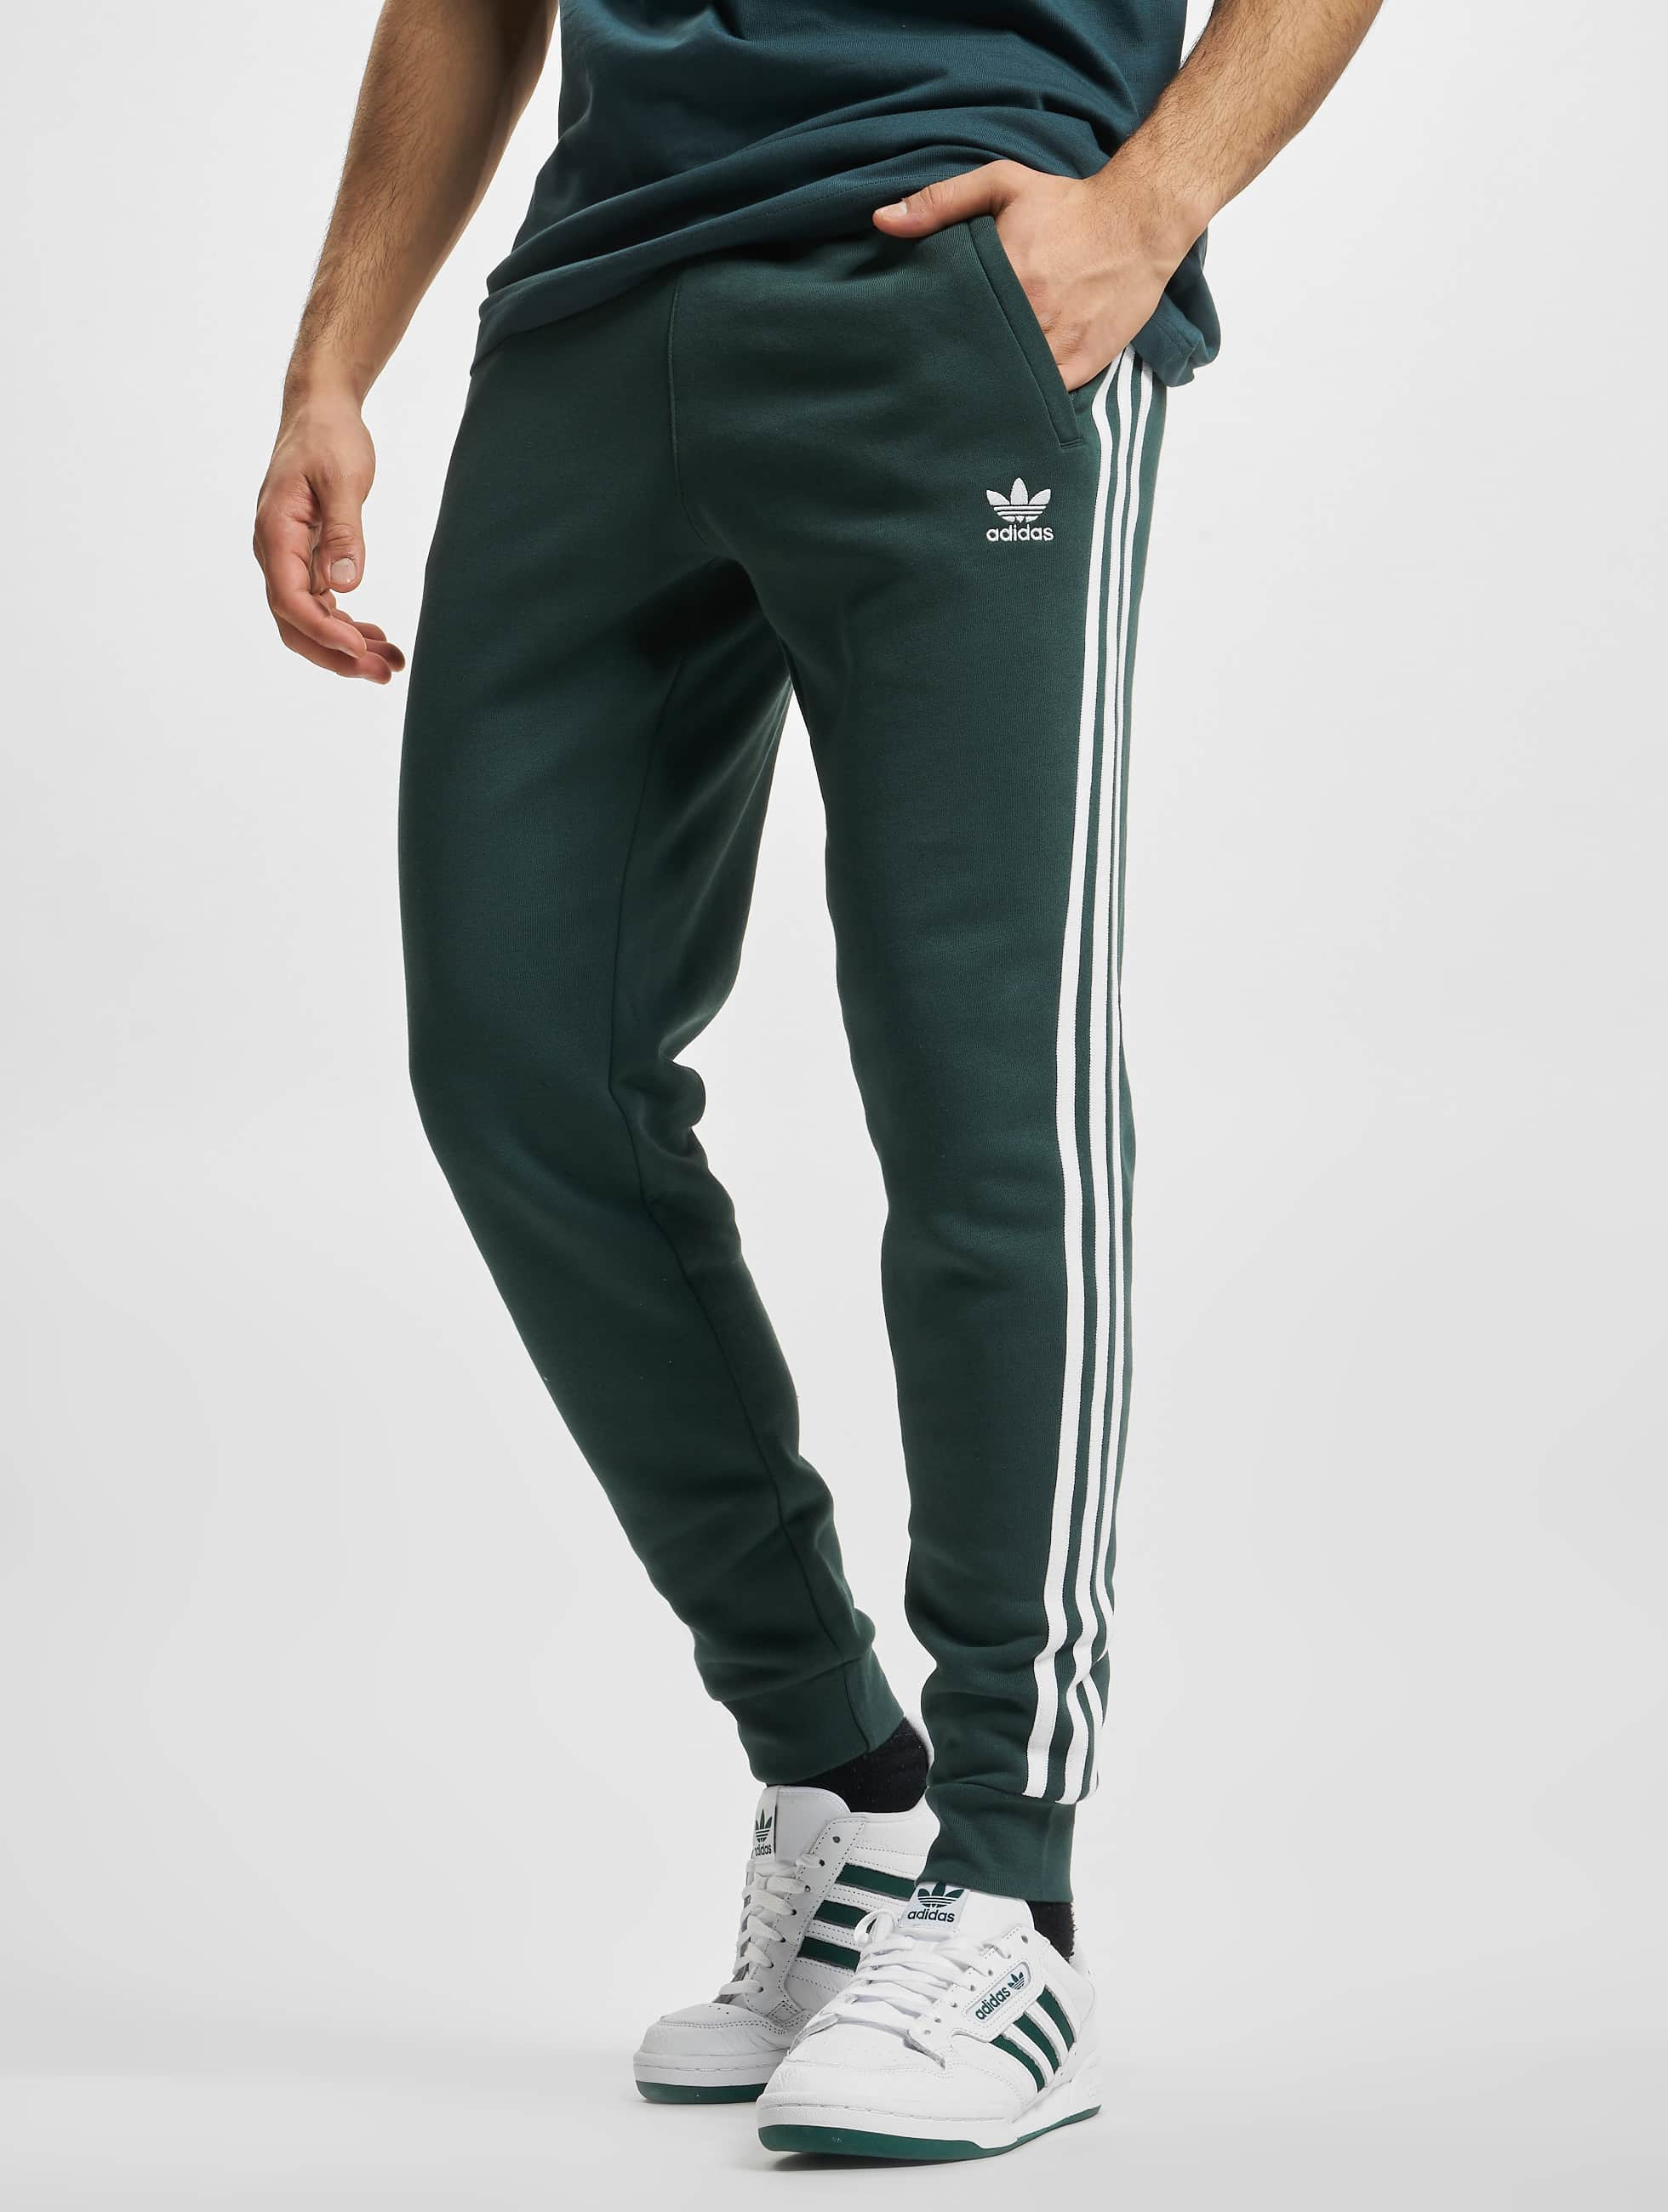 adidas Originals Bukser / Joggingbukser Originals 3-Stripes i grøn